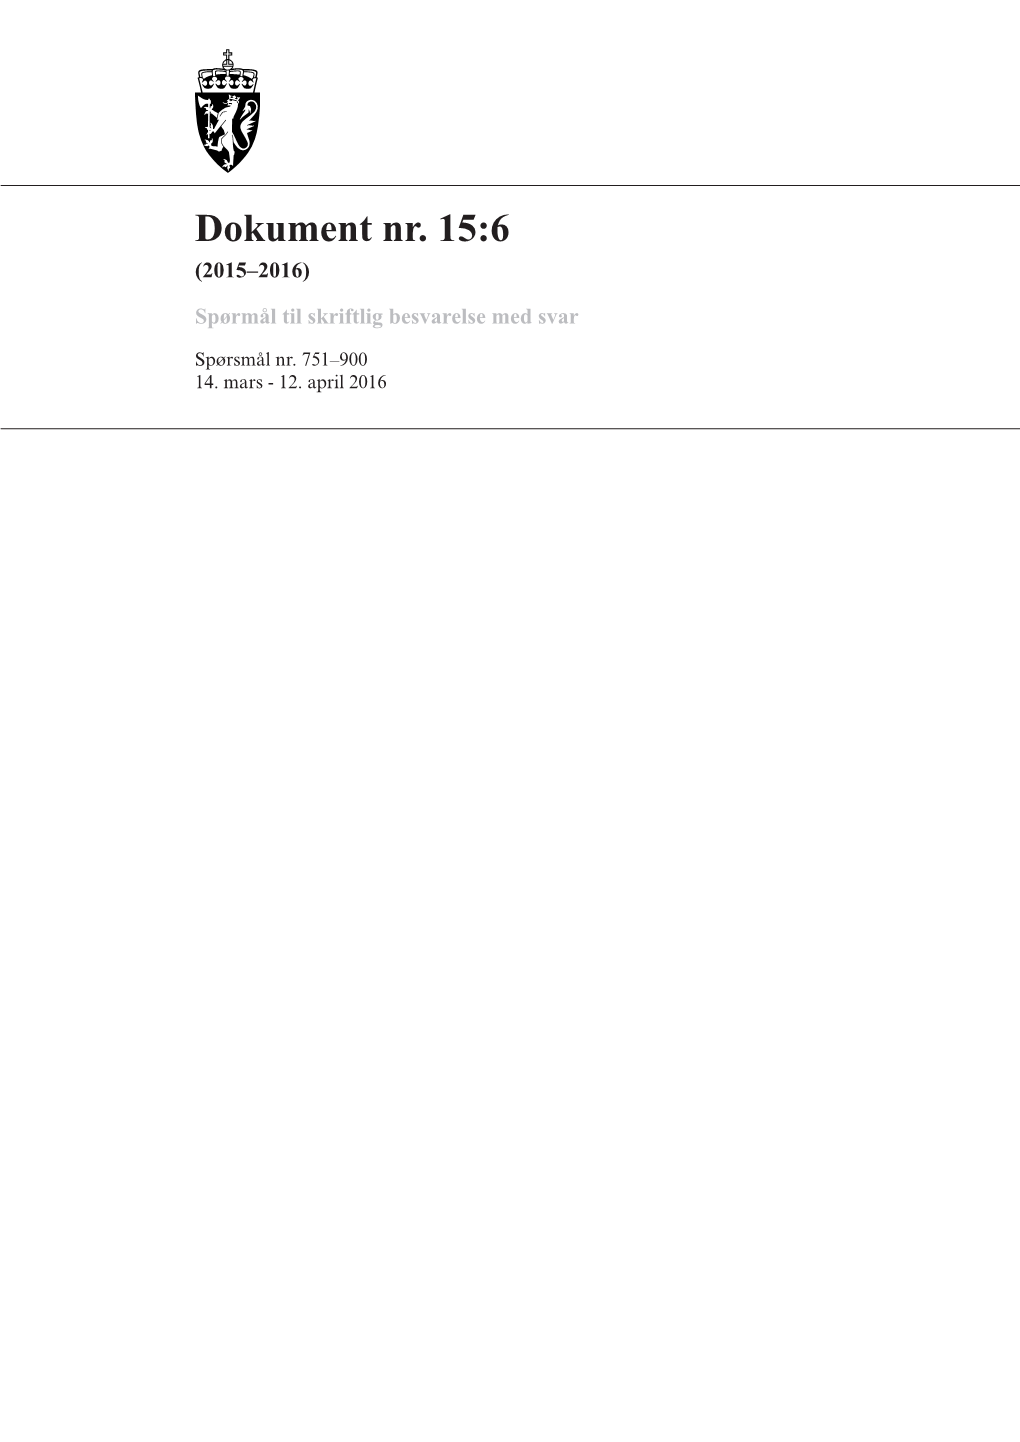 Dokument Nr. 15:6 (2015-2016). Spørsmål Nr. 751-900